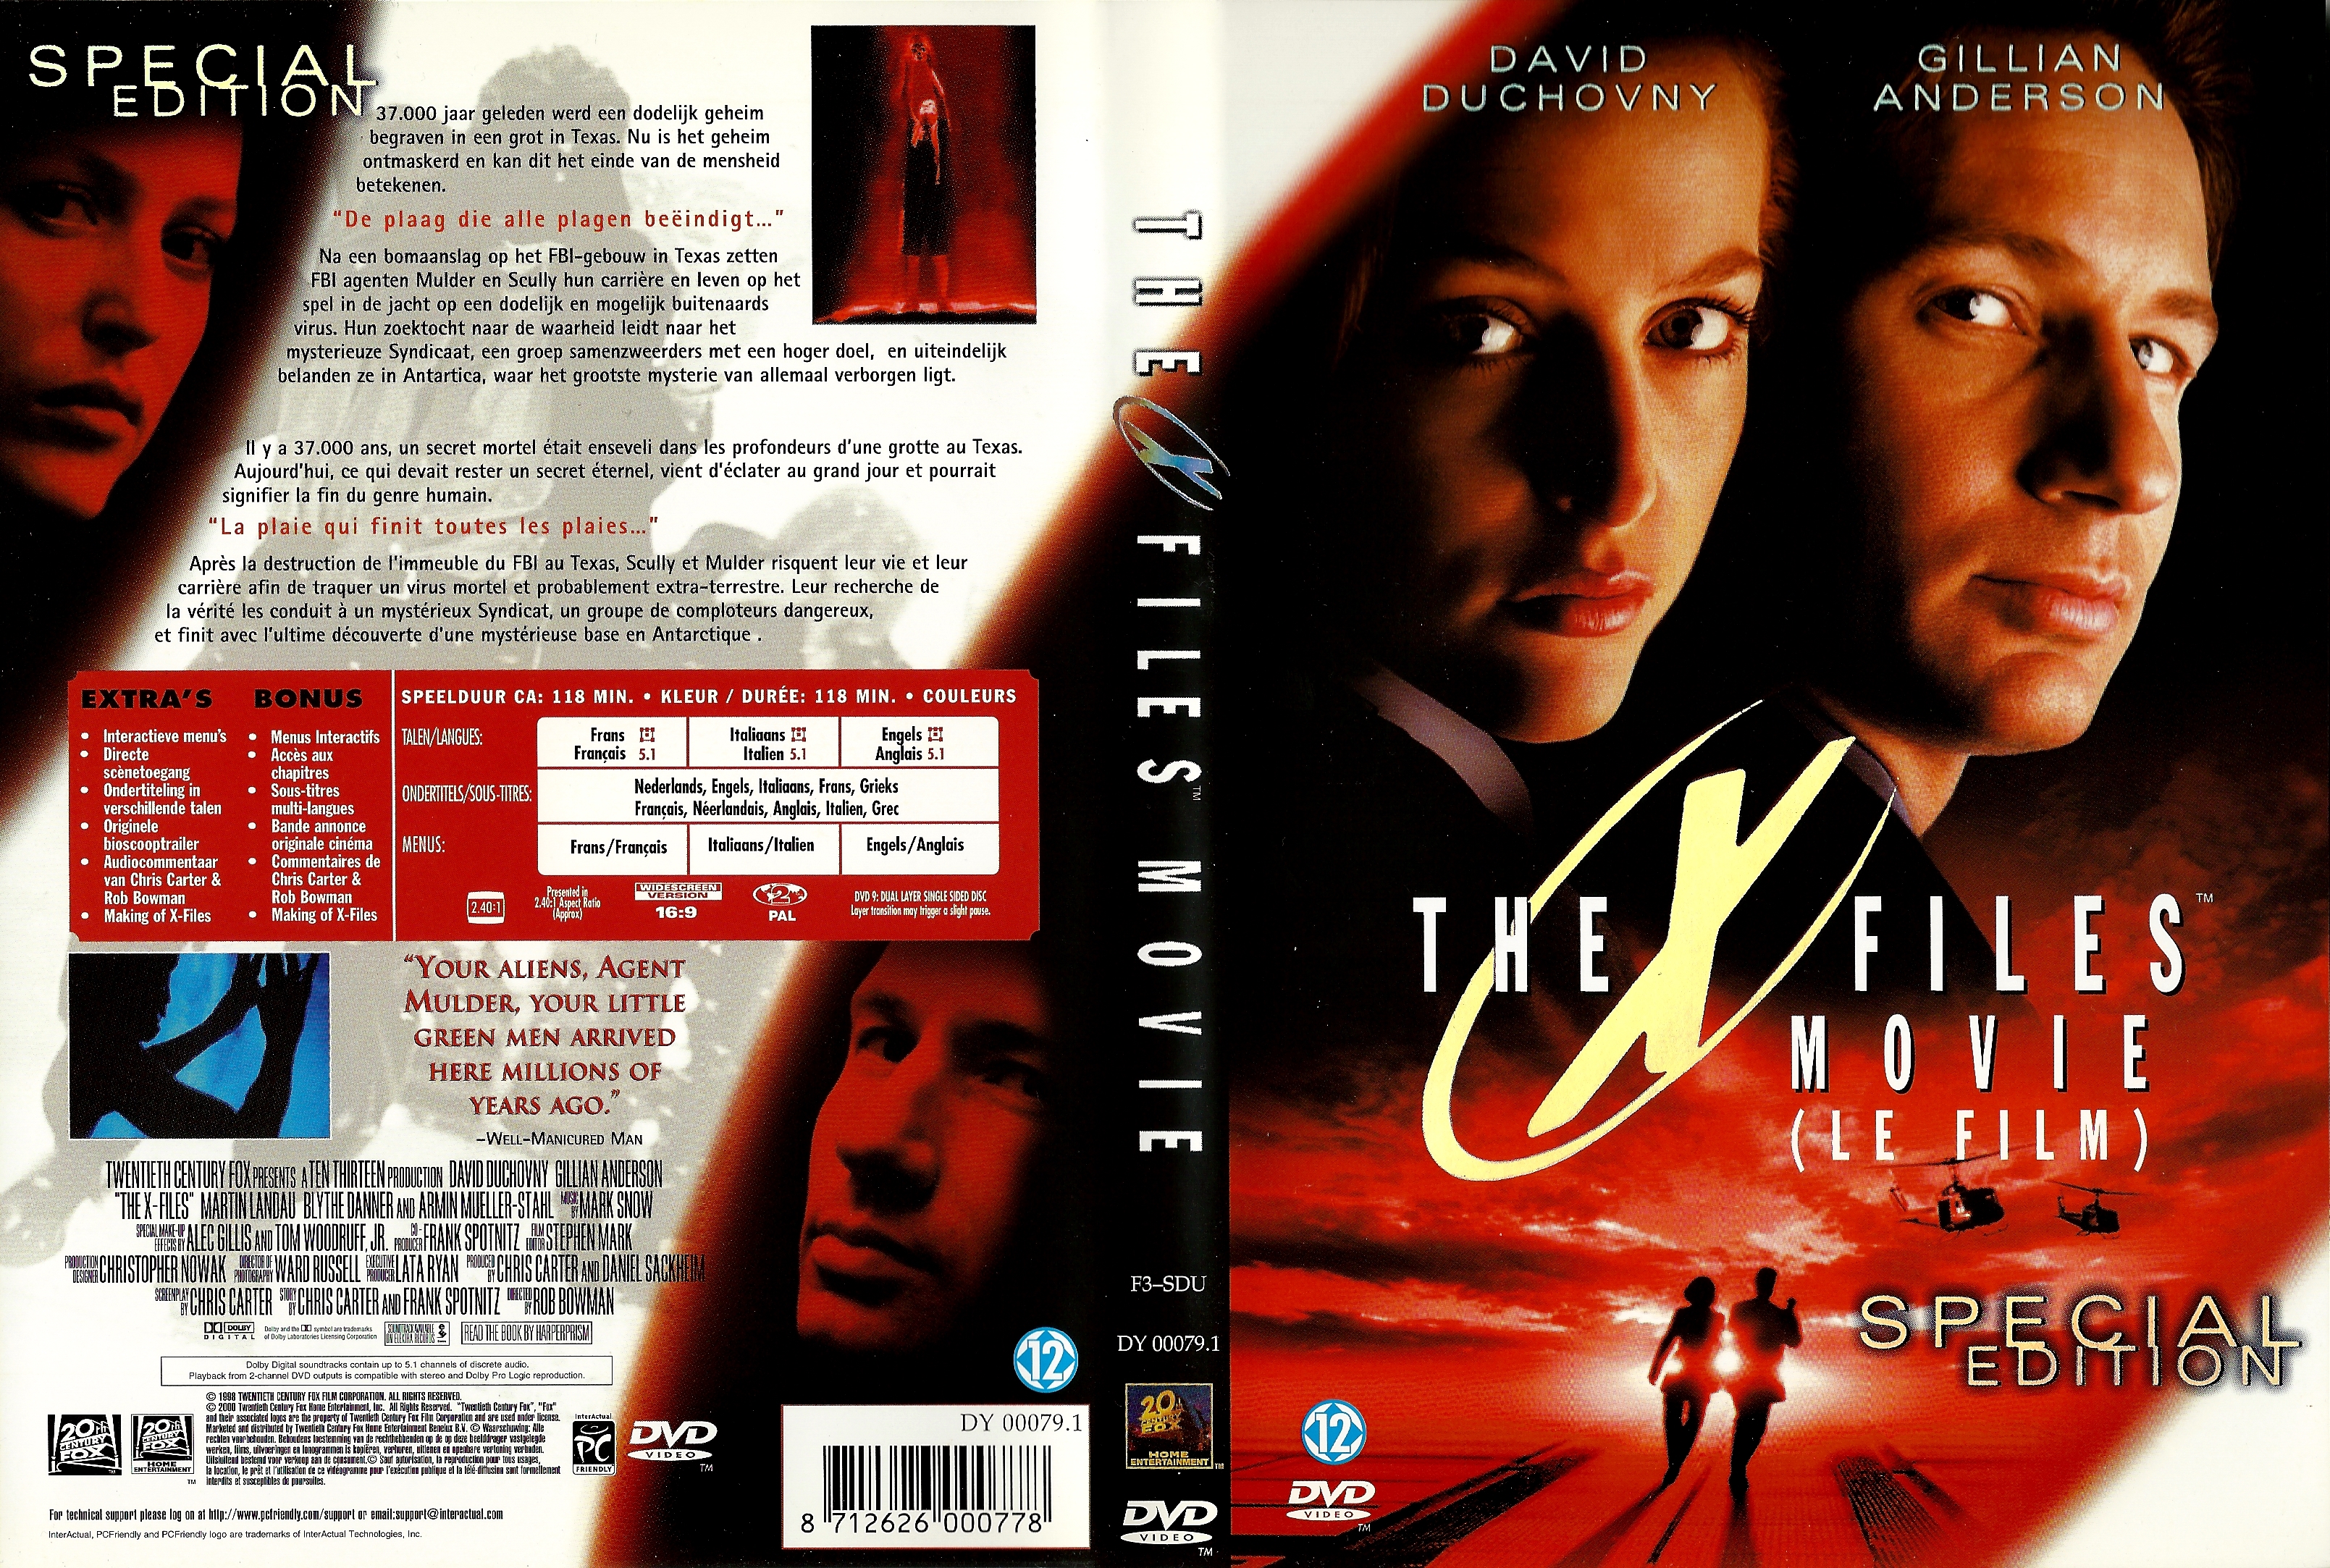 Jaquette DVD X Files Le film v3